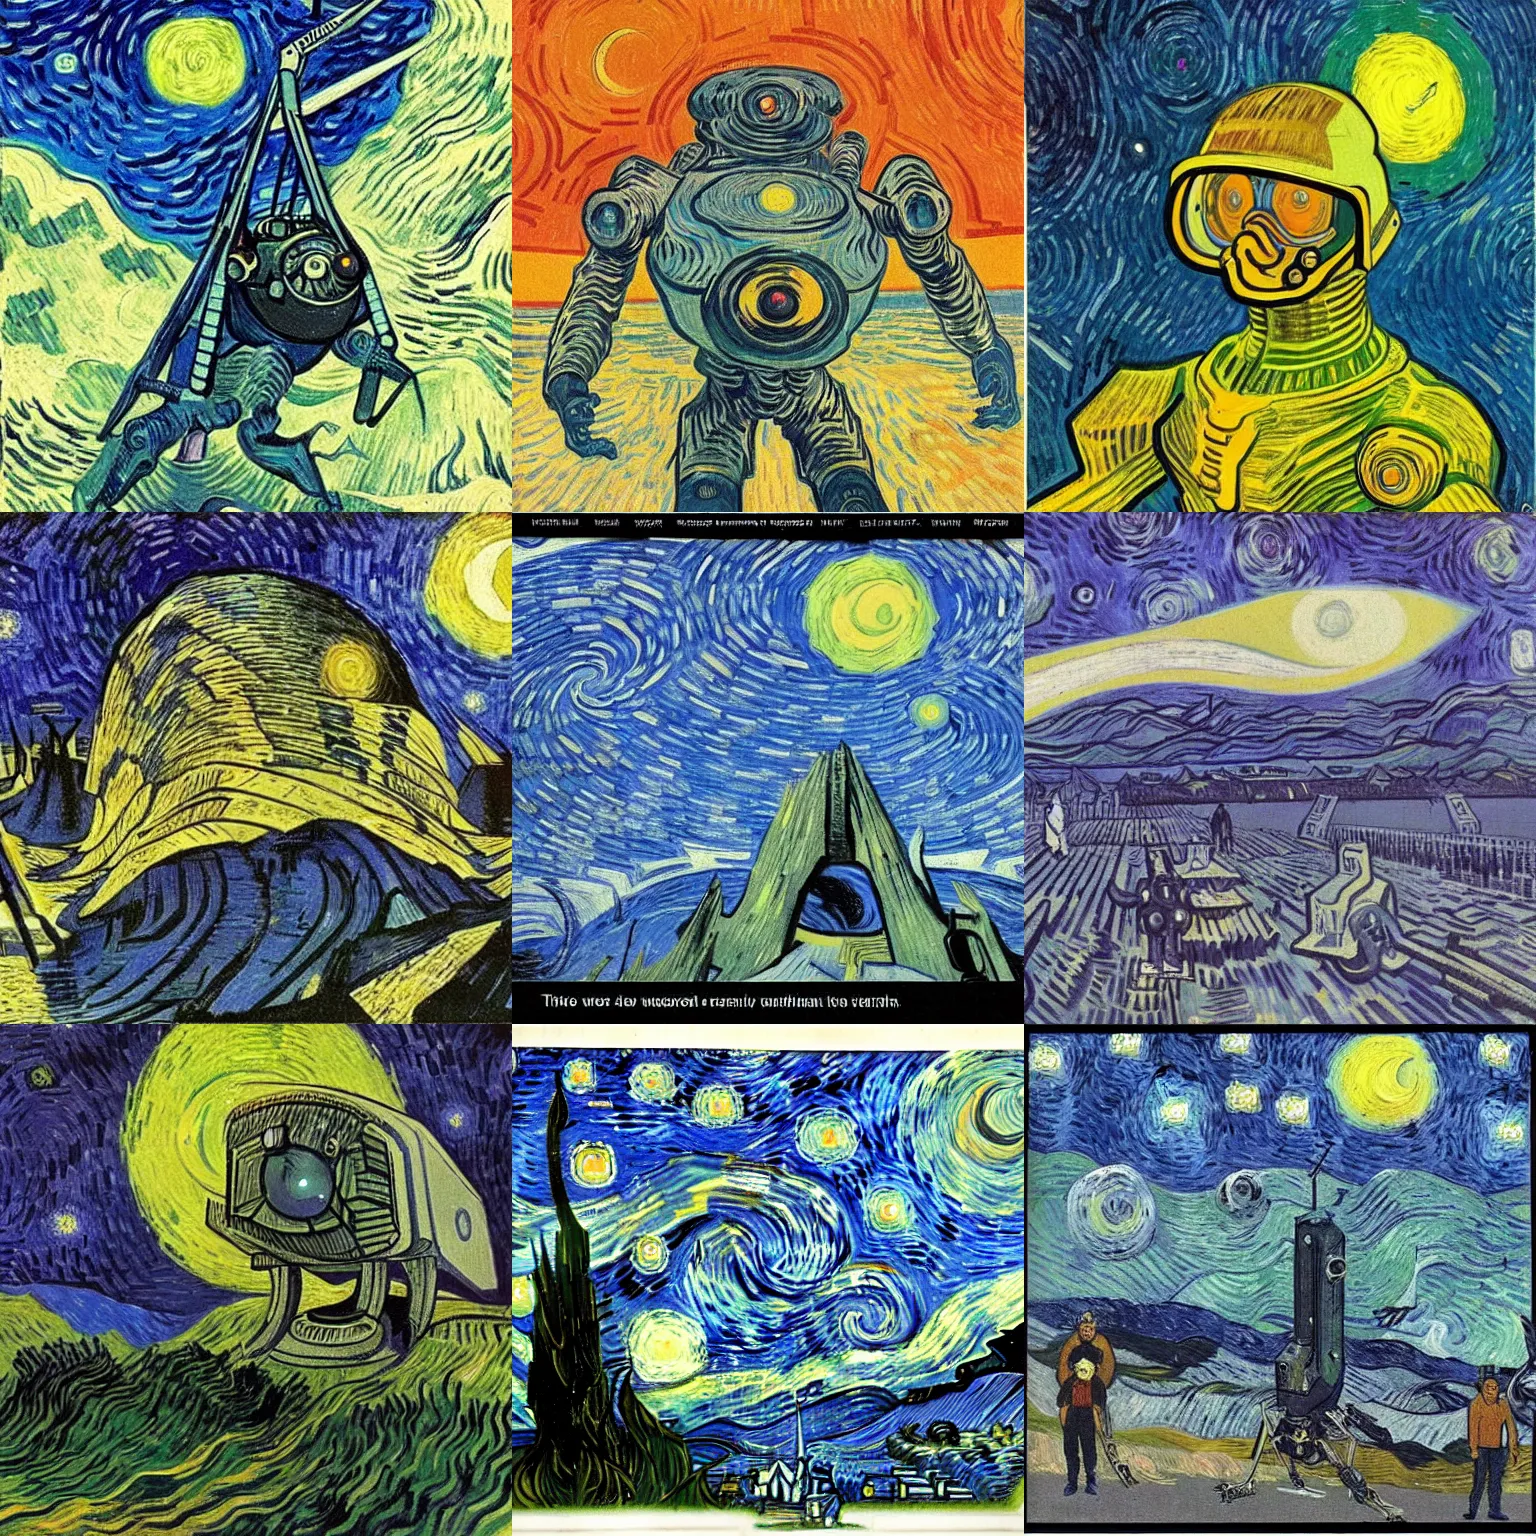 Prompt: a 1970s sci-fi illustration by Vincent van Gogh